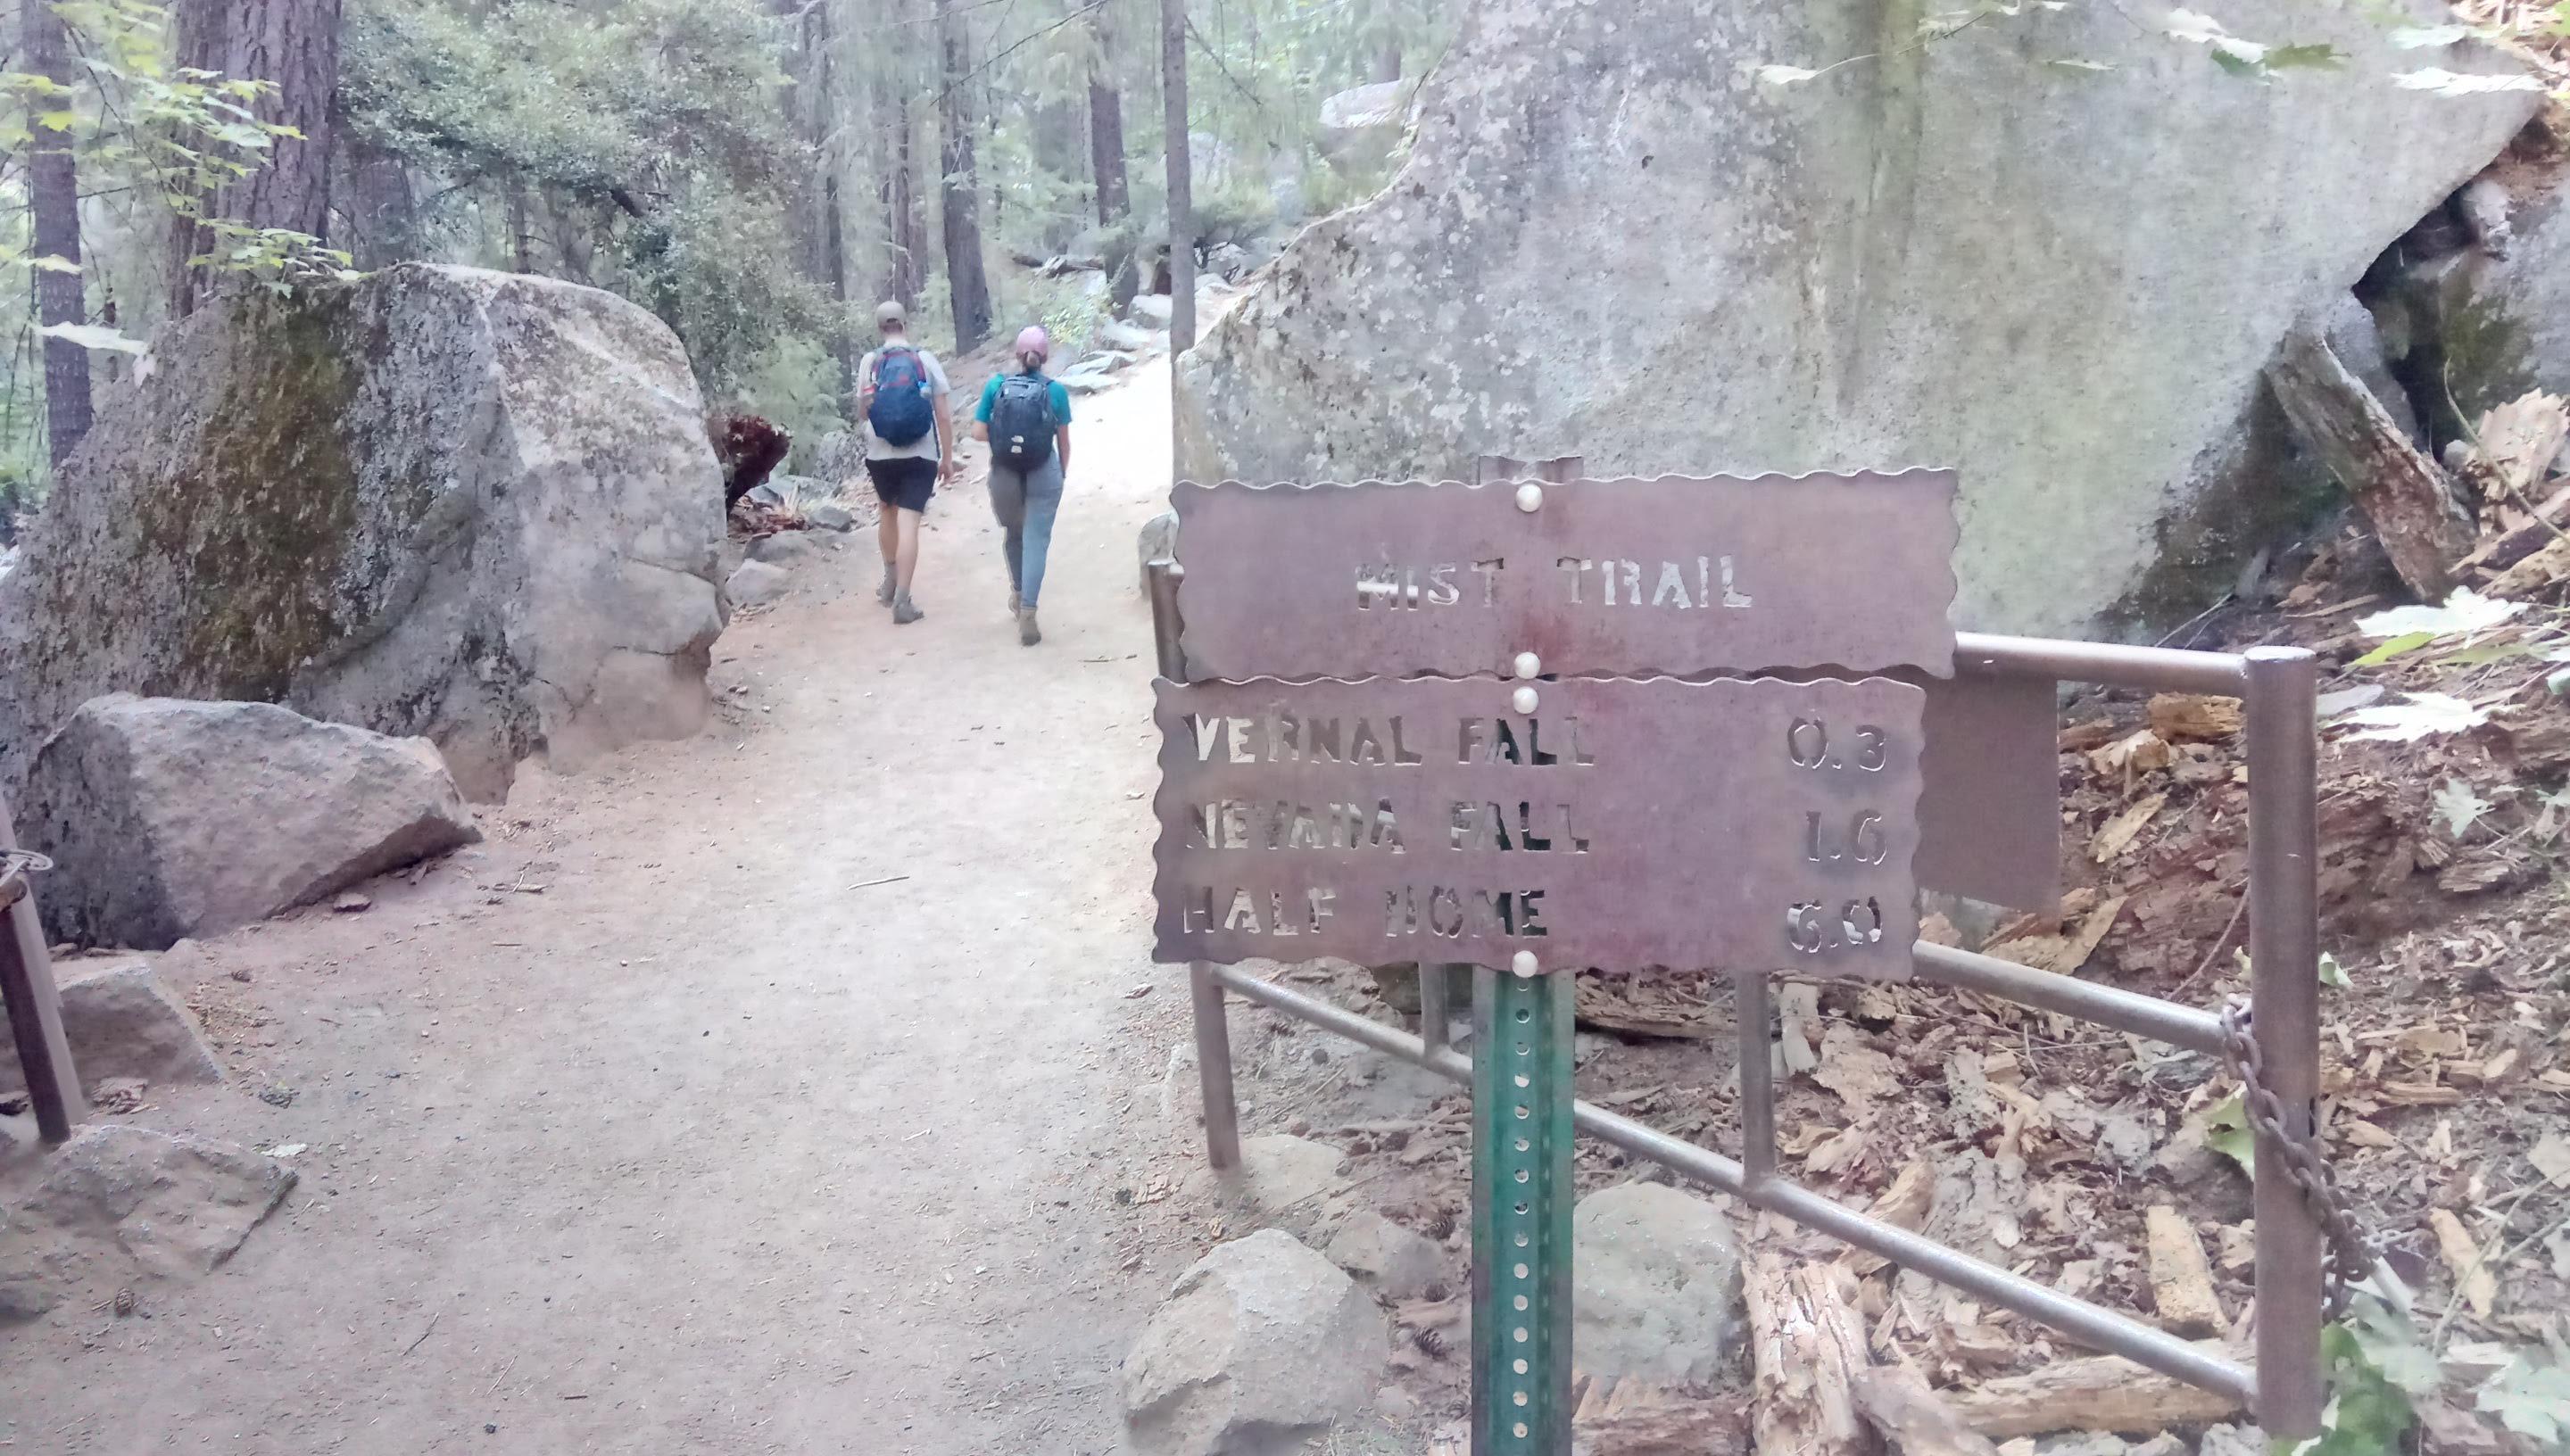 Mist trail sign